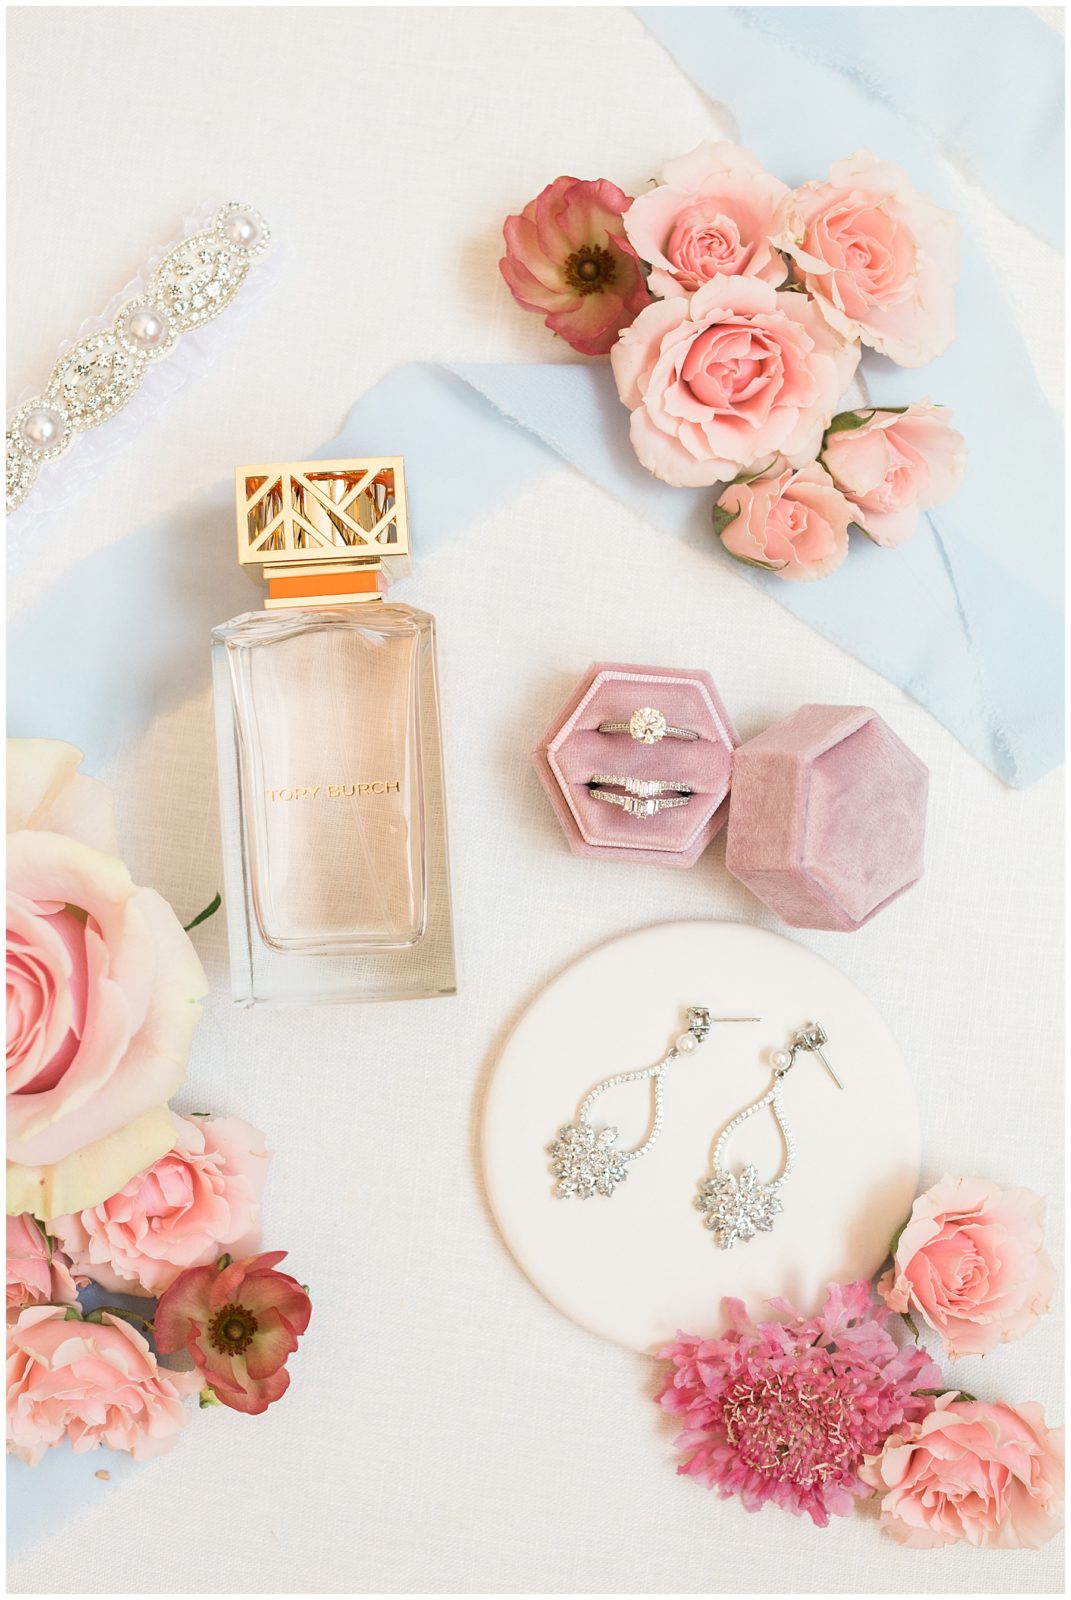 Jewelry and perfume flatlay on wedding morning